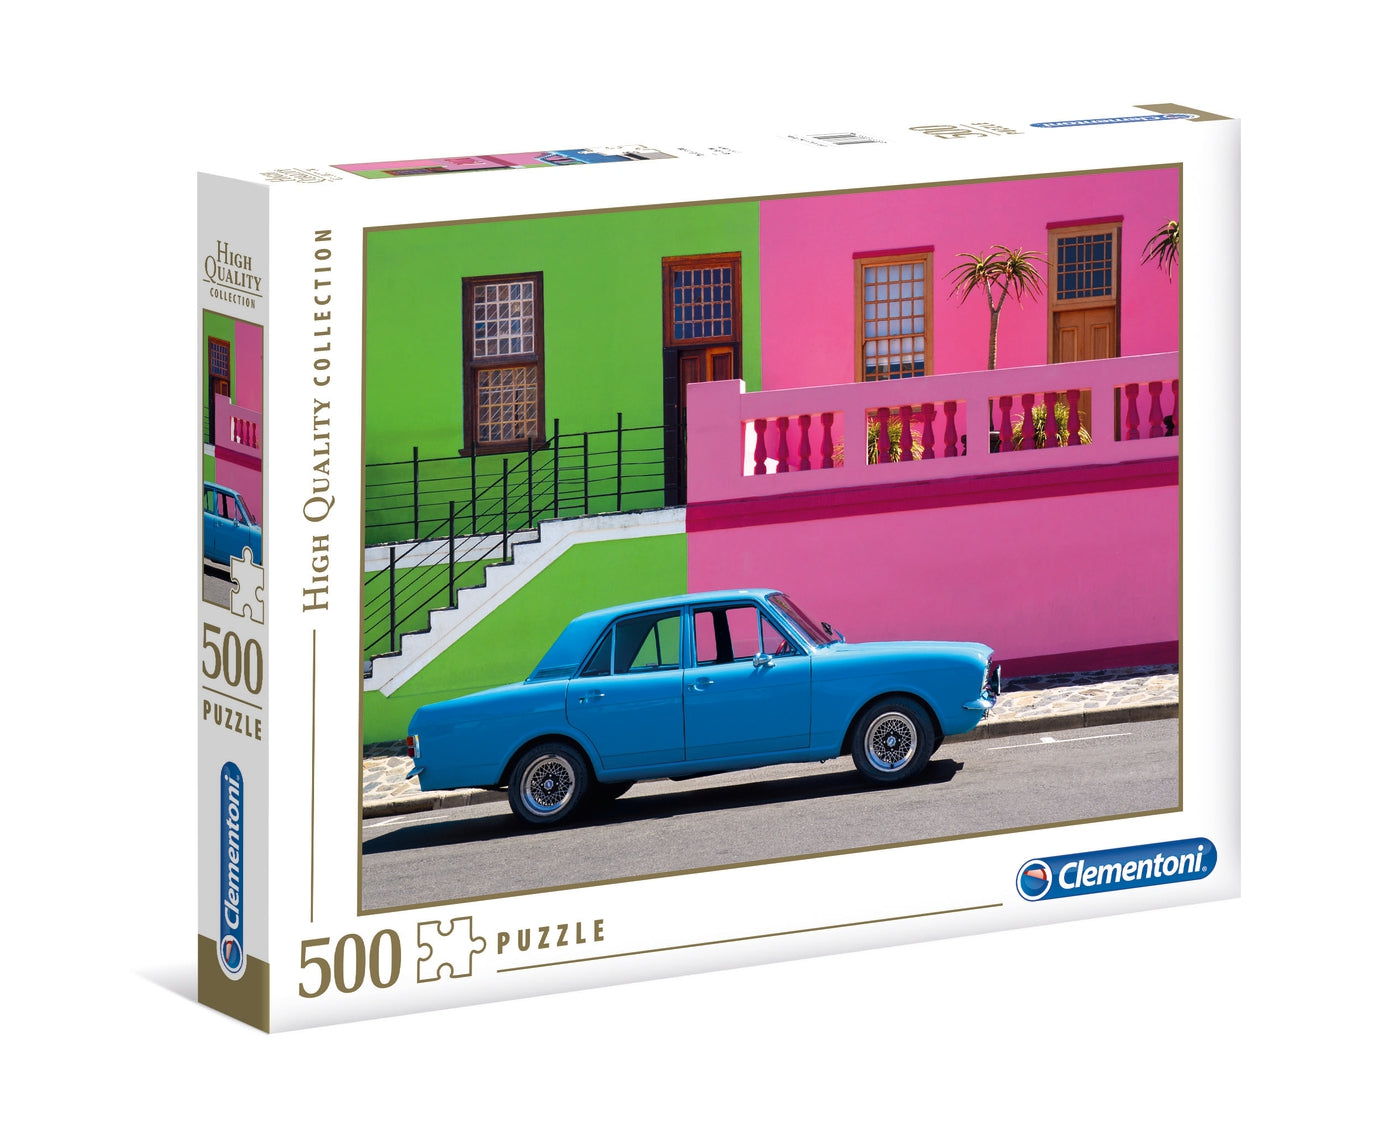 HQC 500pc Puzzle - The Blue Car